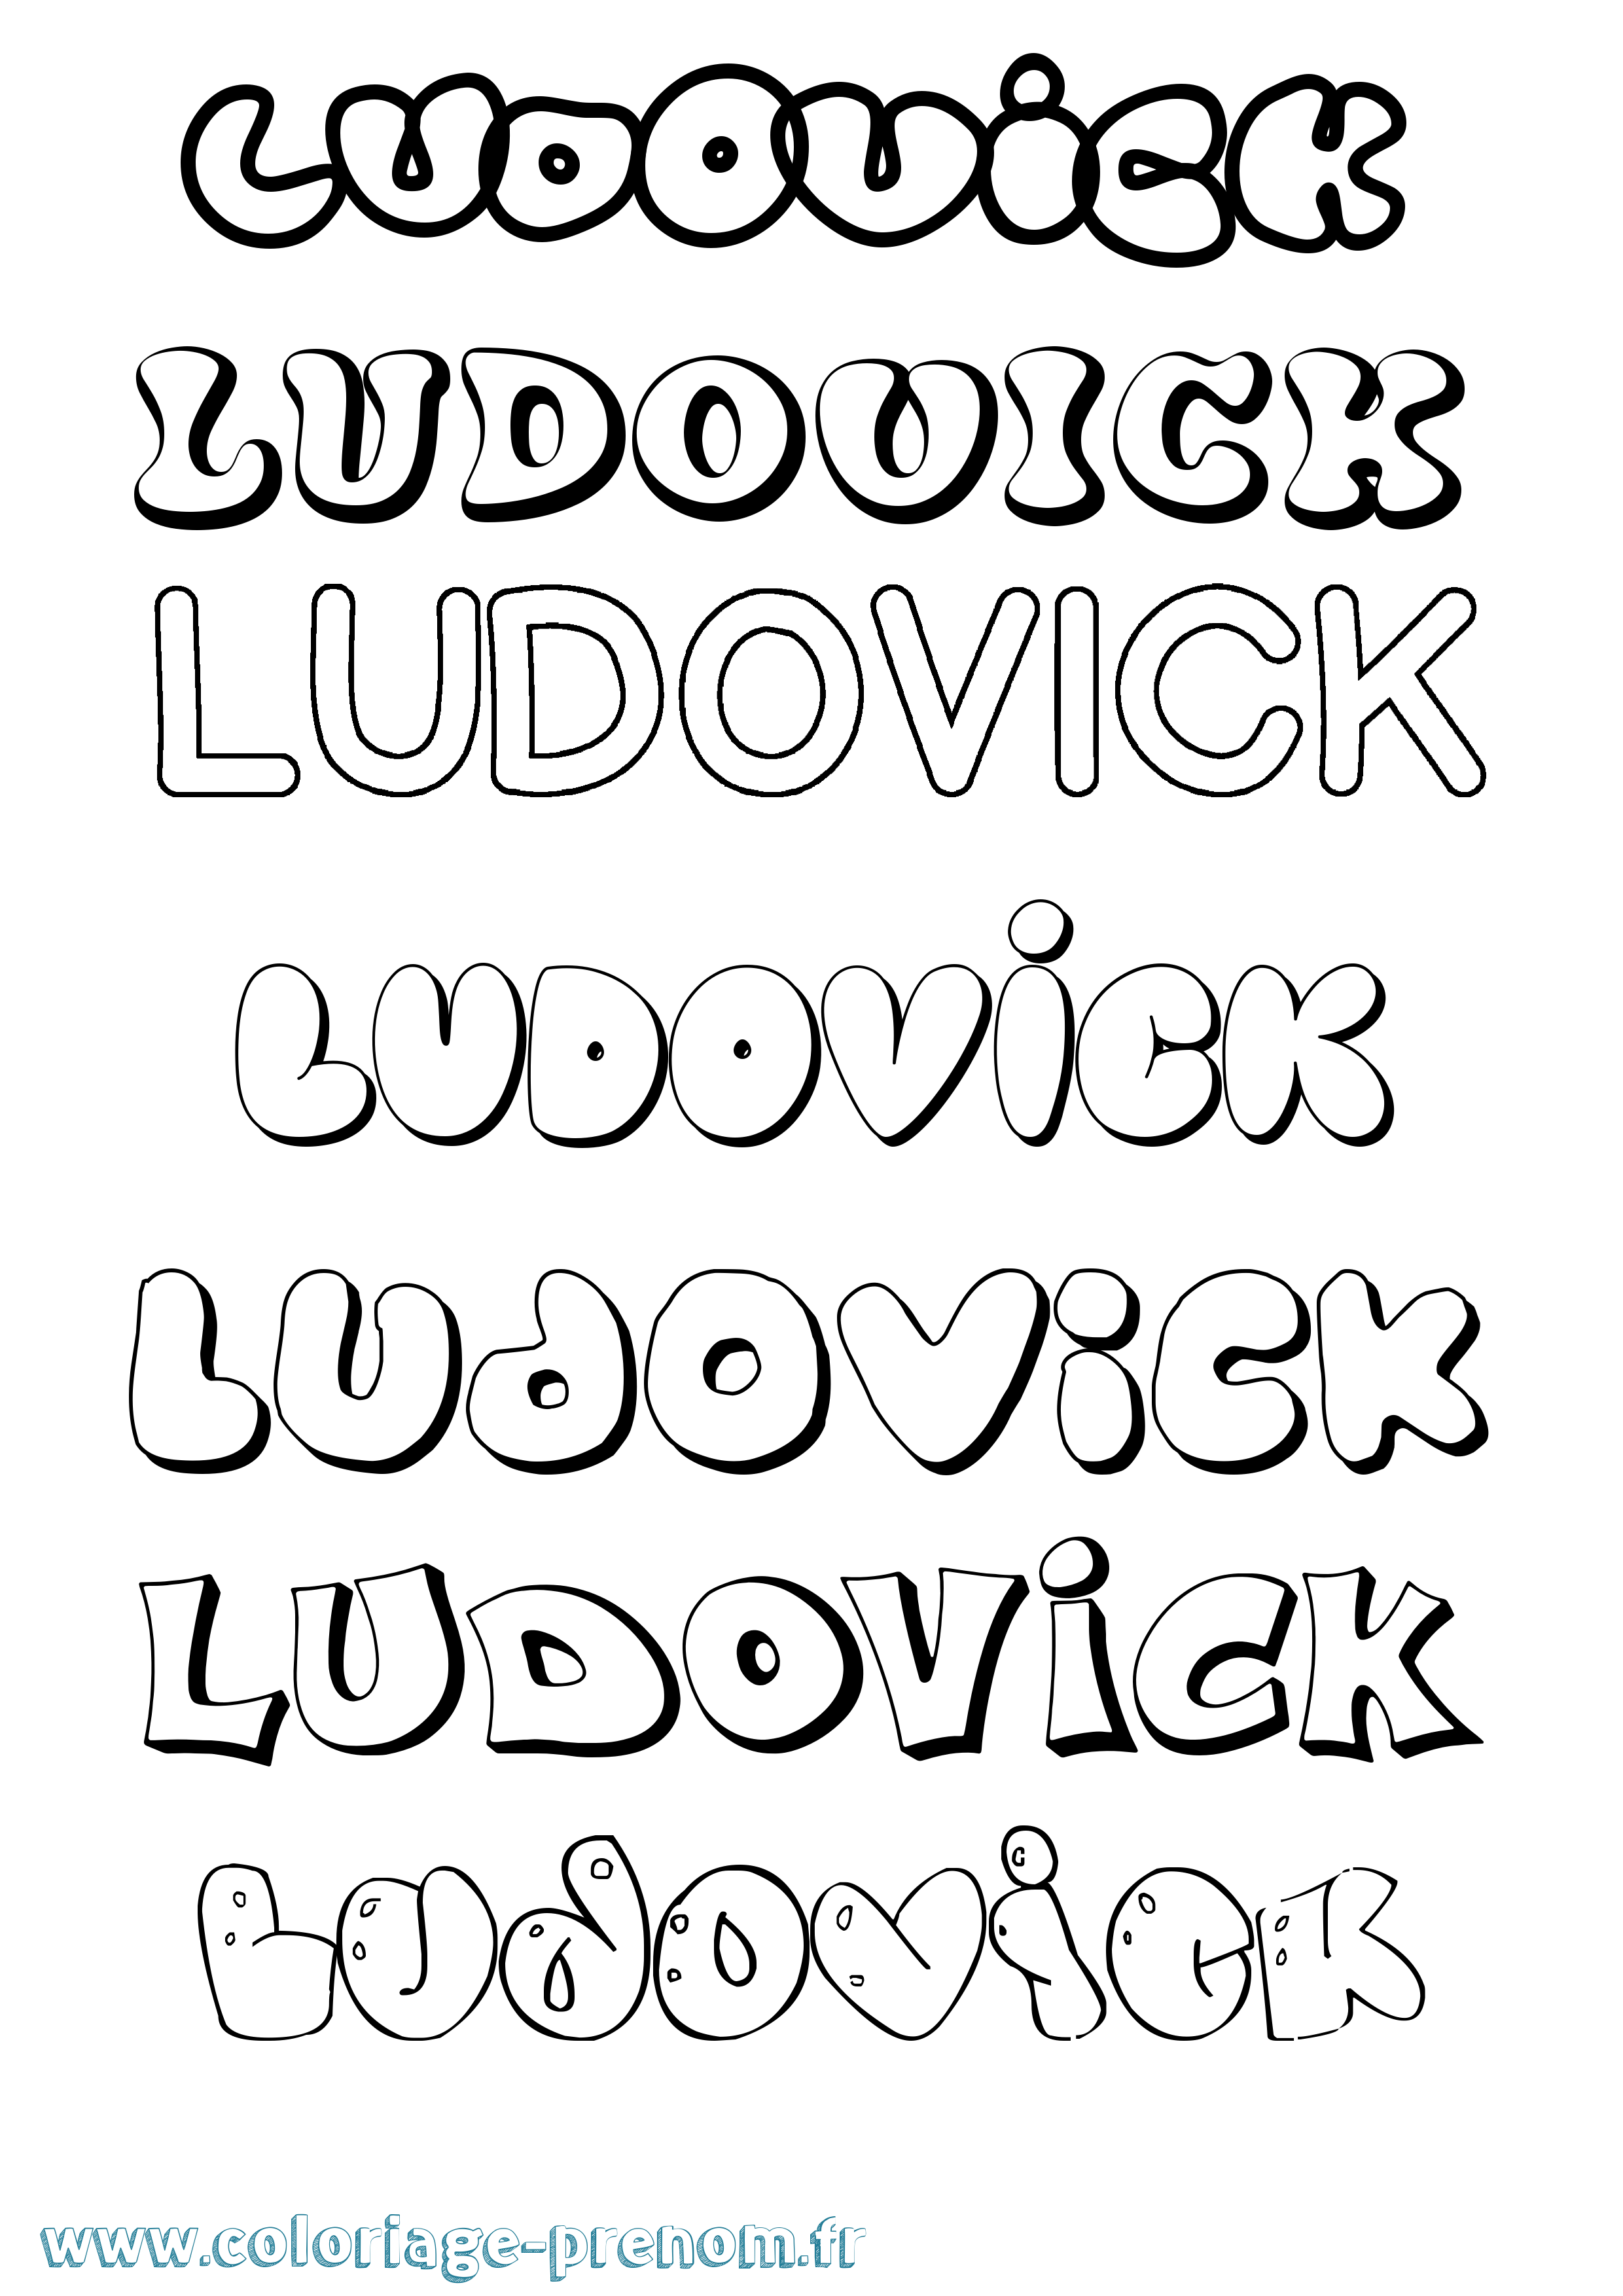 Coloriage prénom Ludovick Bubble